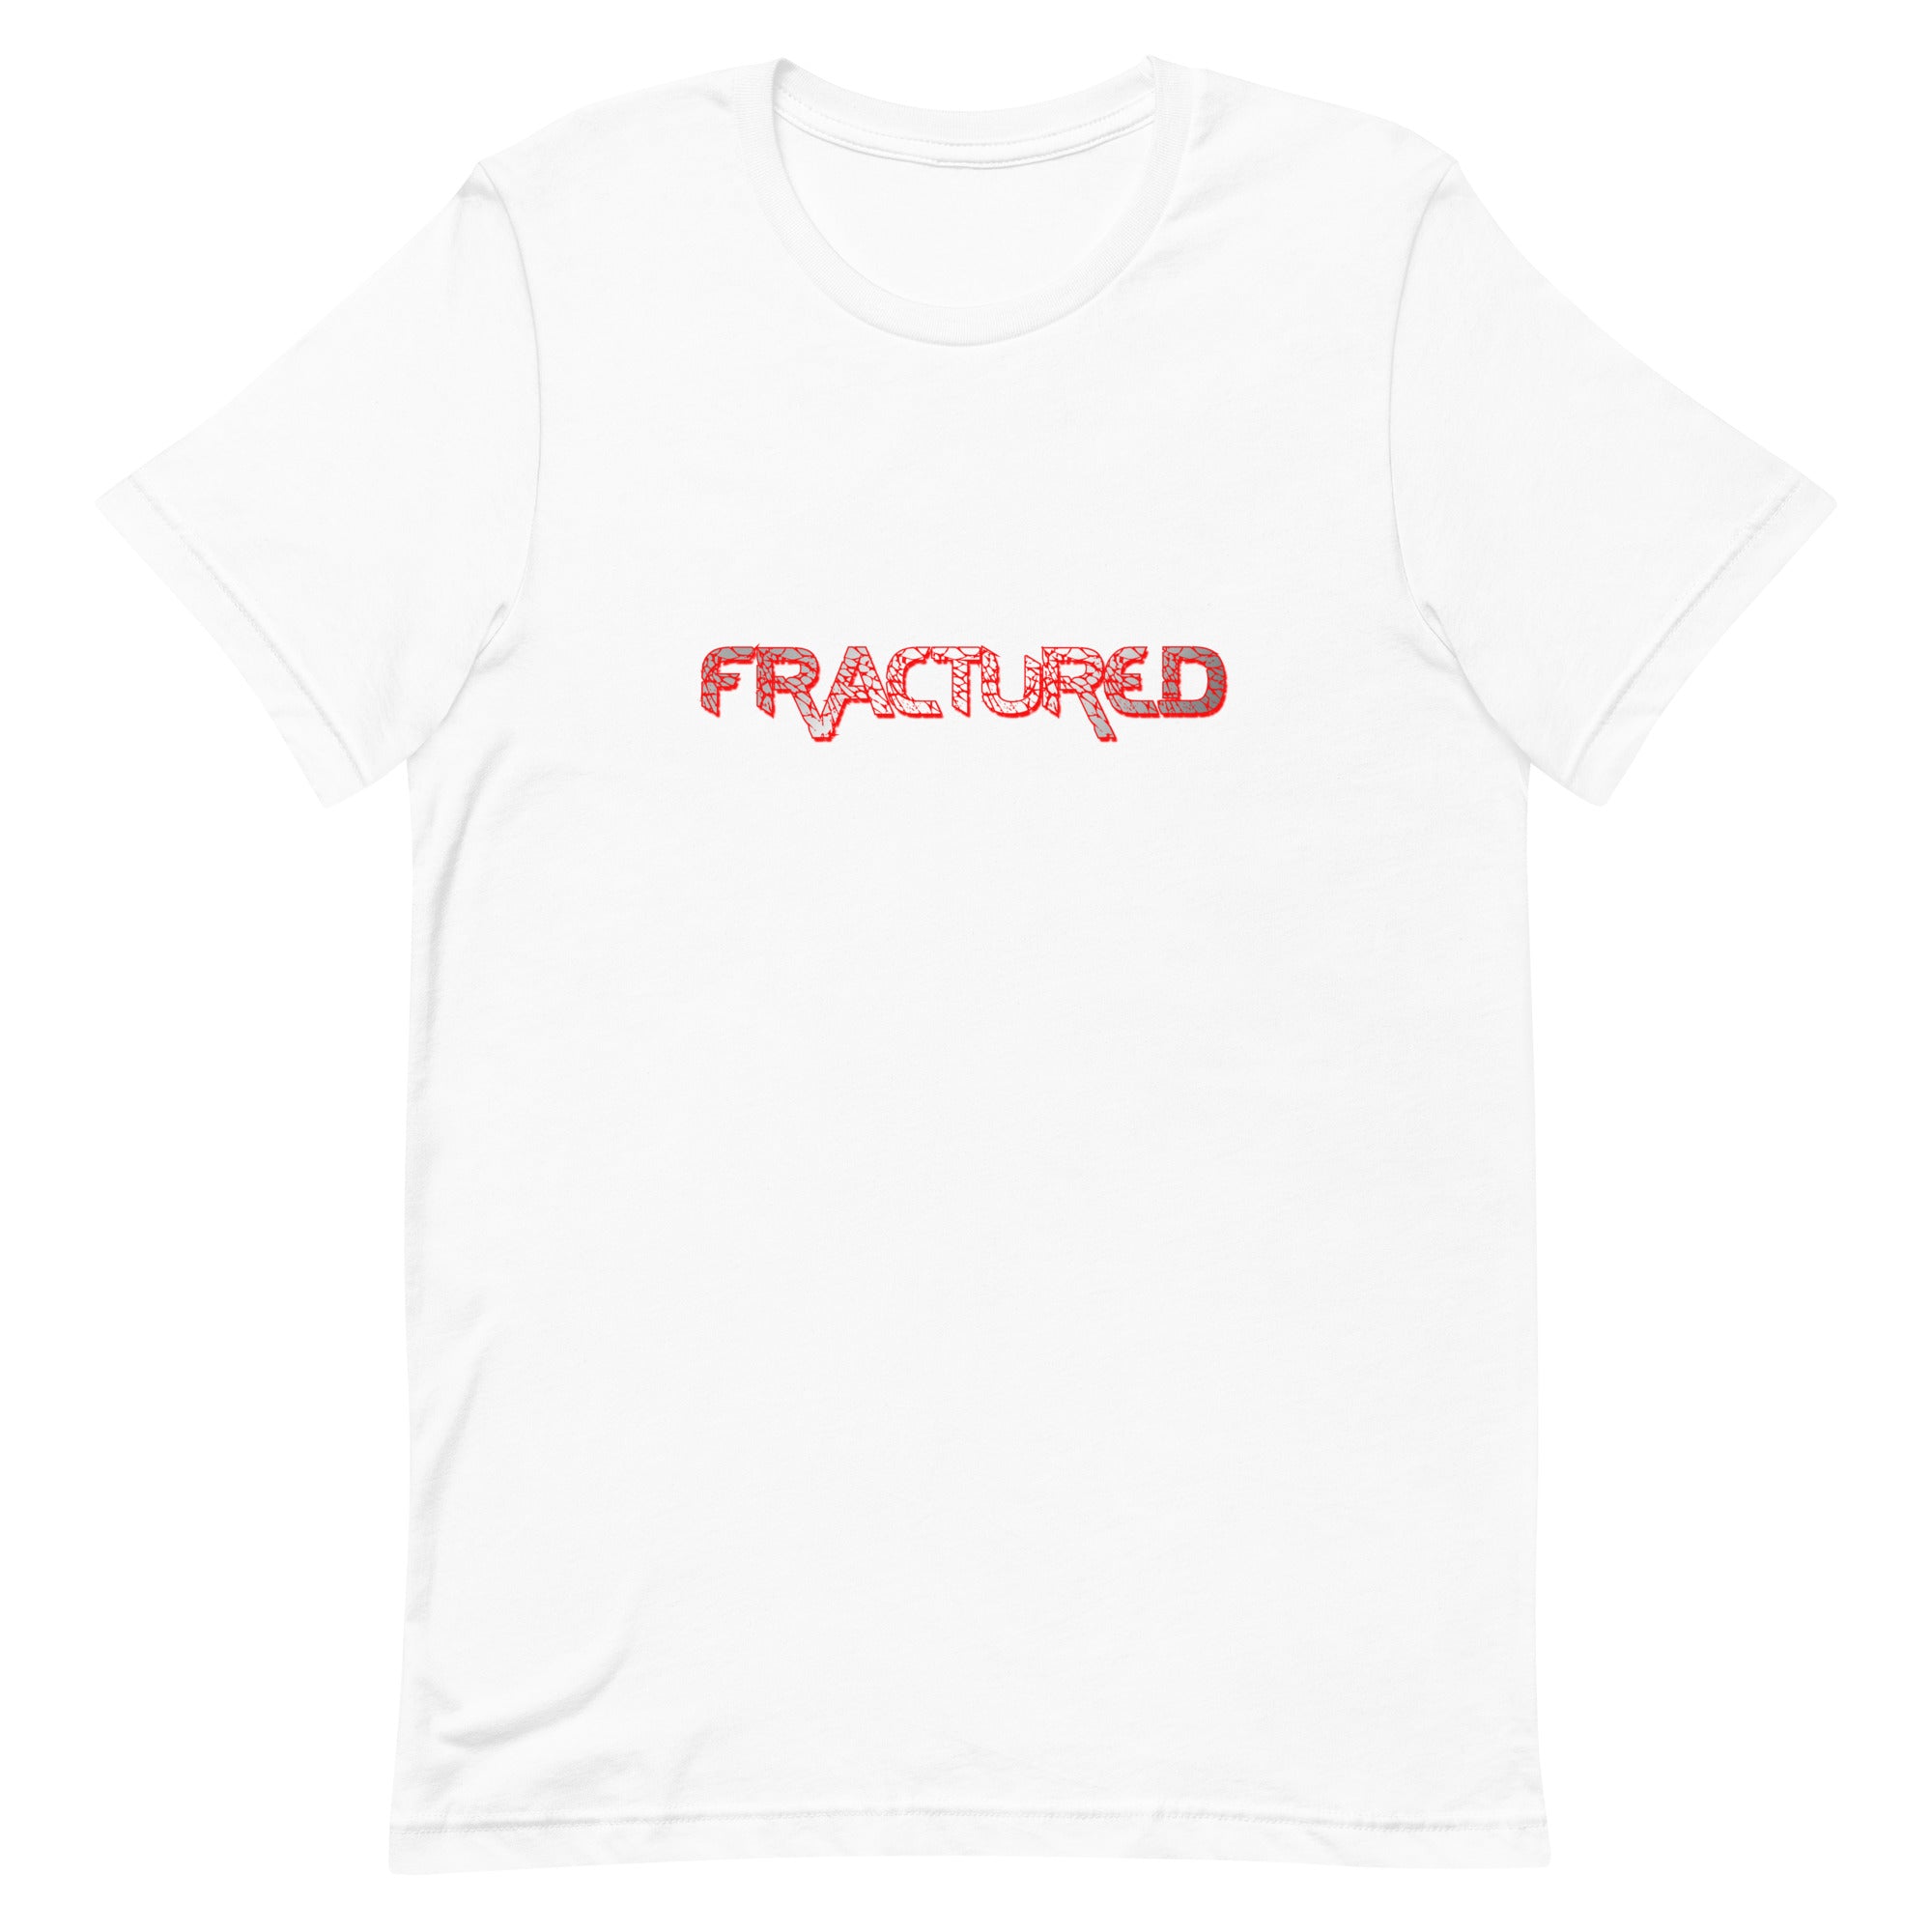 Fractured - Unisex t-shirt